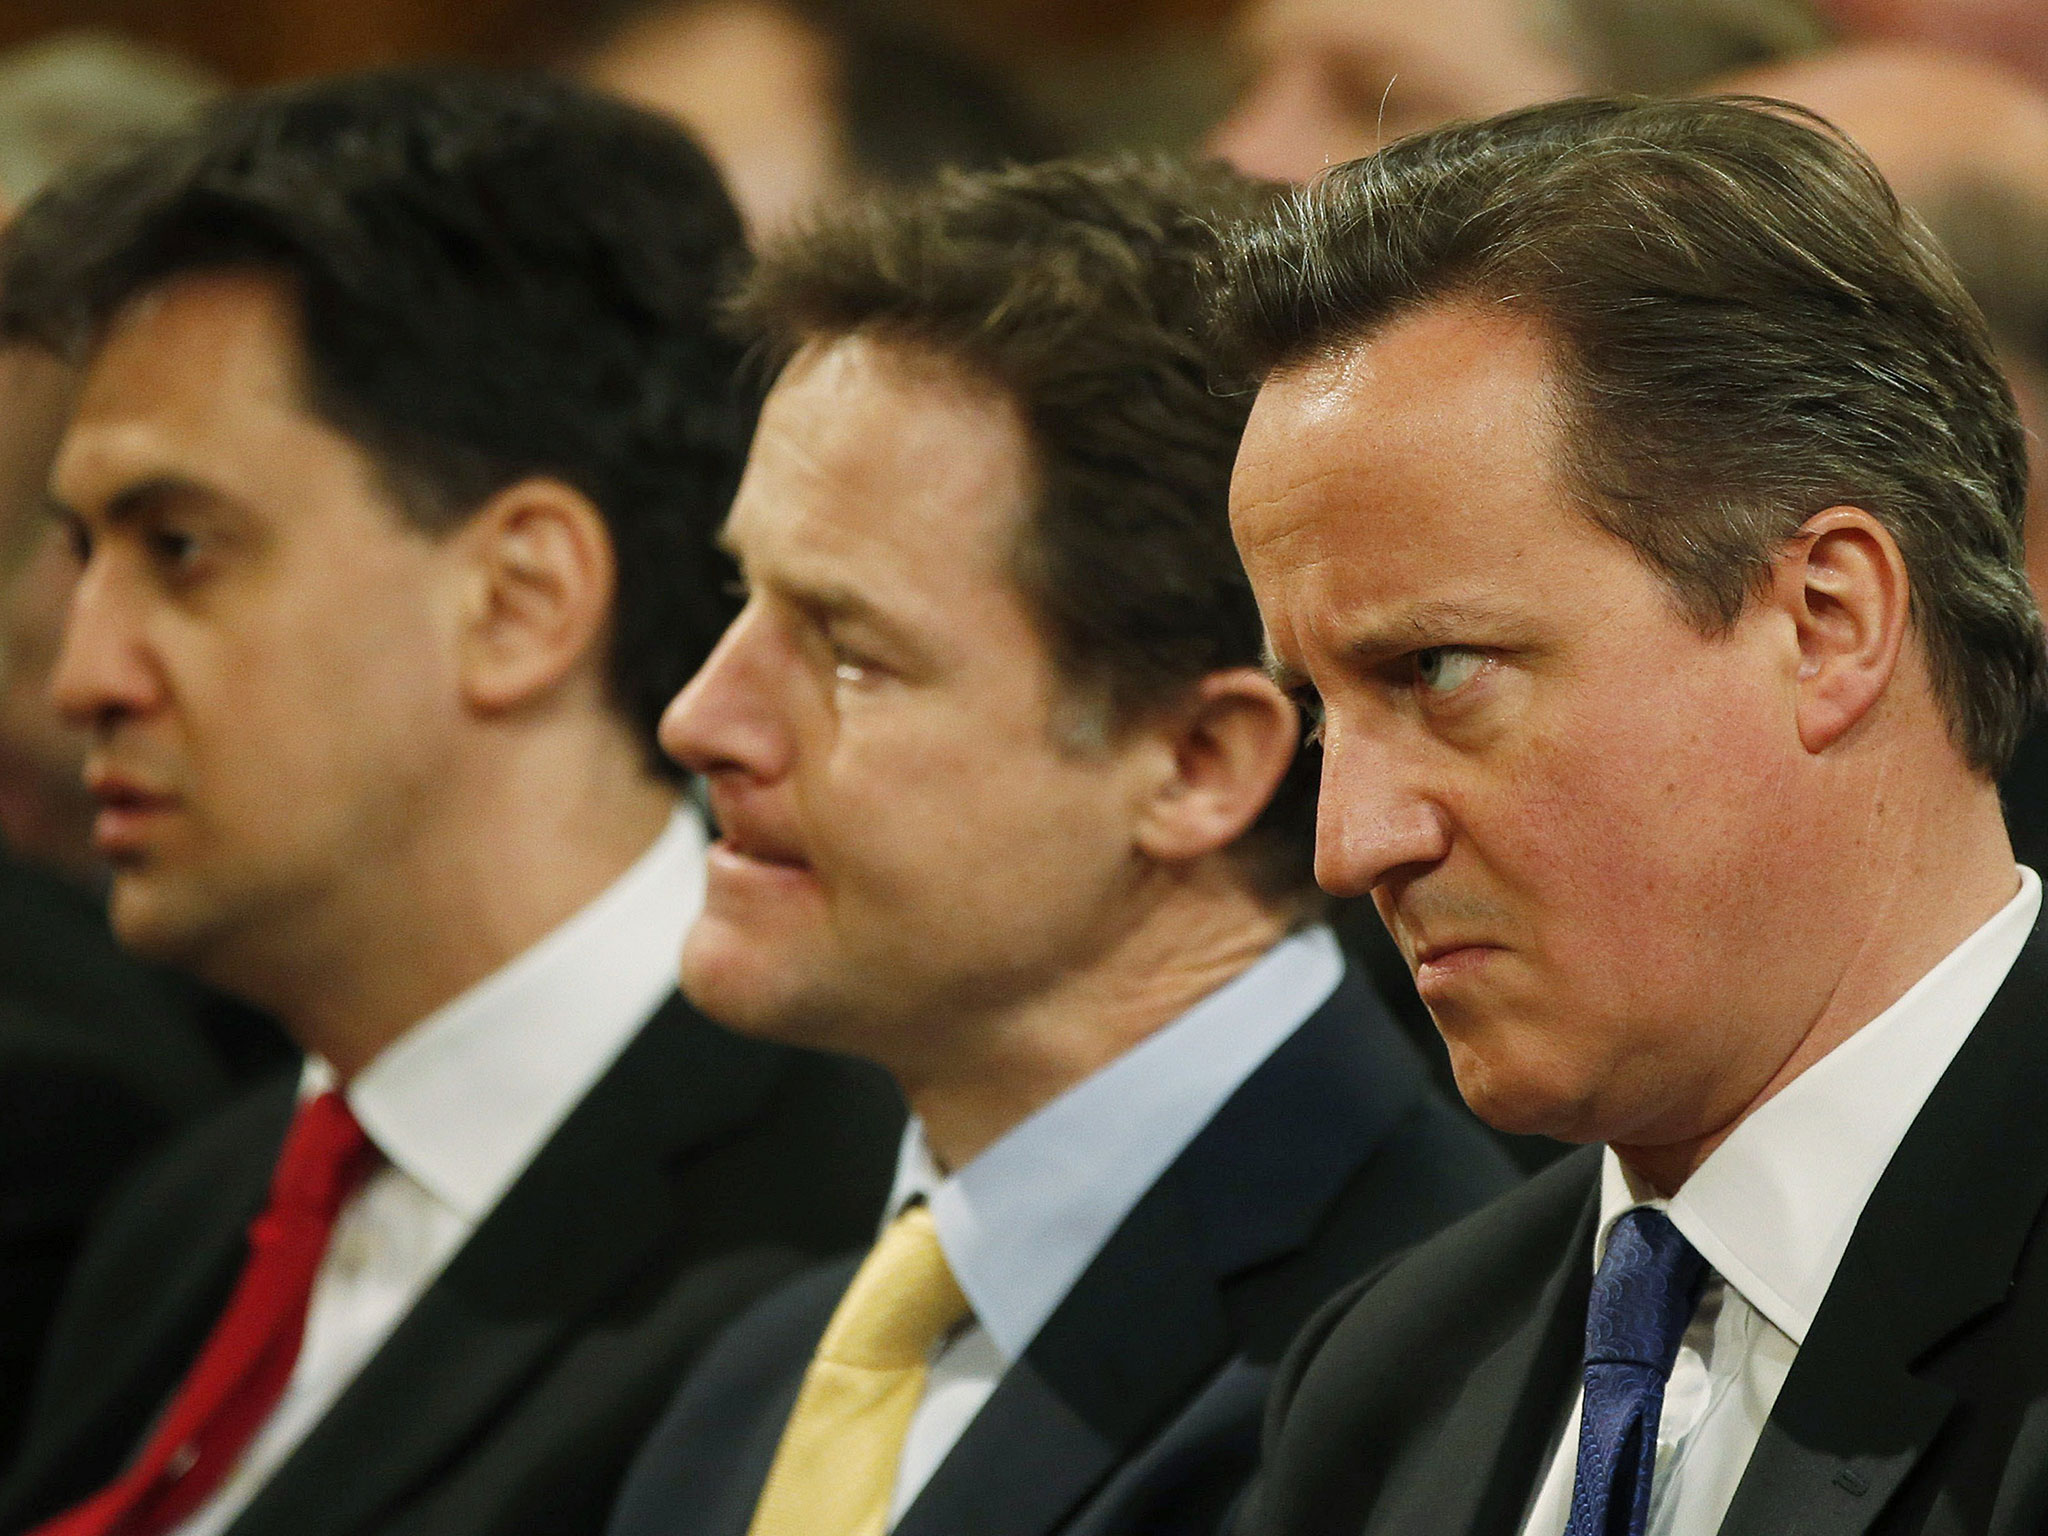 Ed Miliband, Nick Clegg et David Cameron.